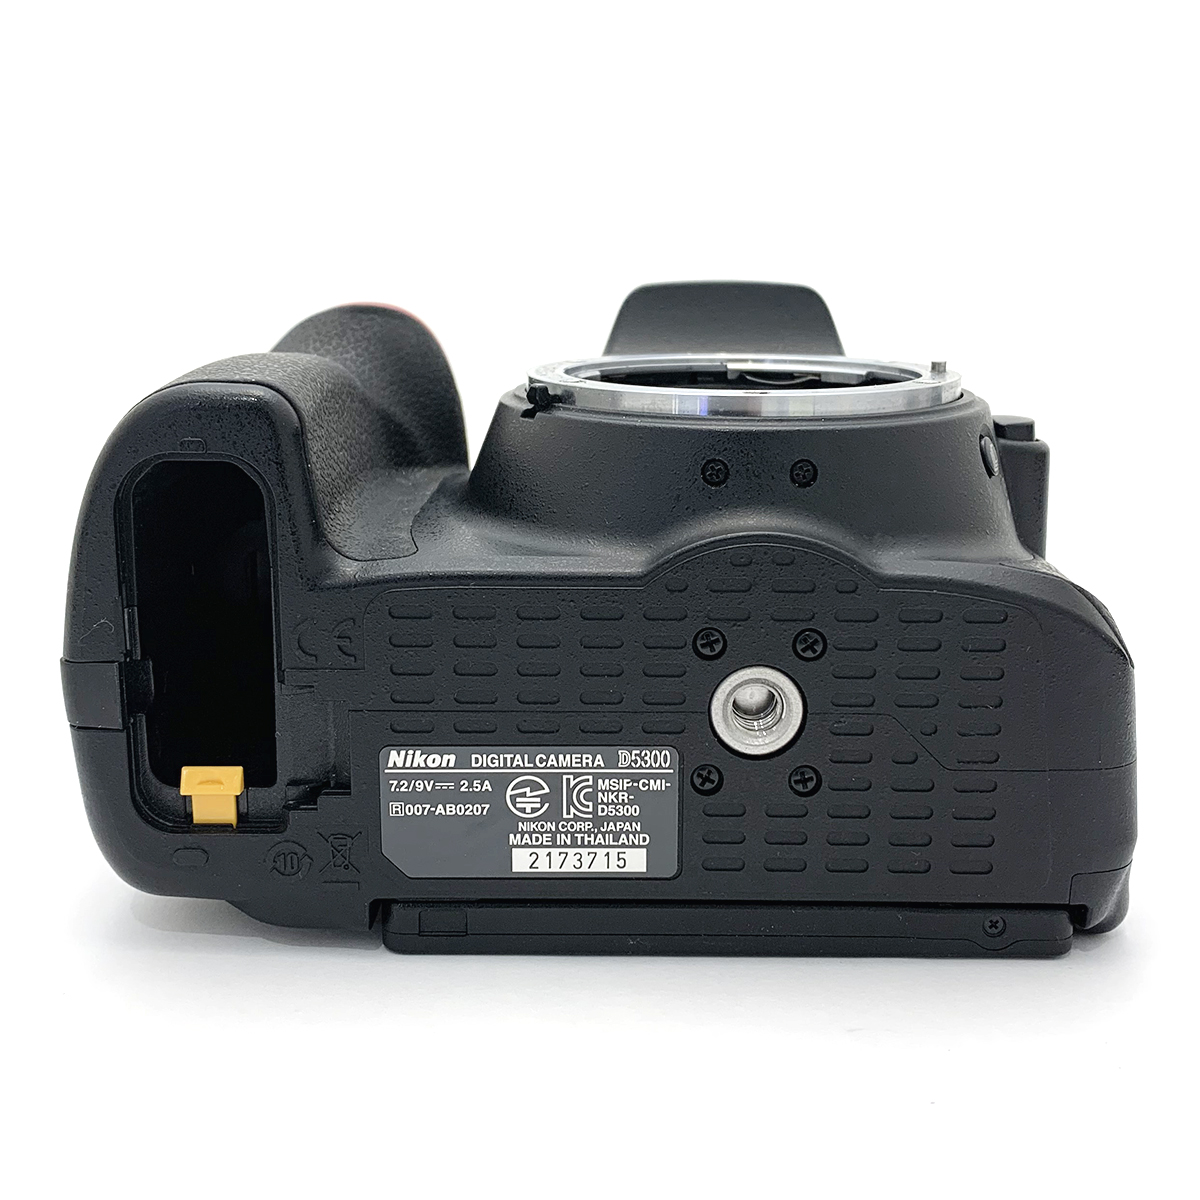 Nikon DIGITAL CAMERA D5300